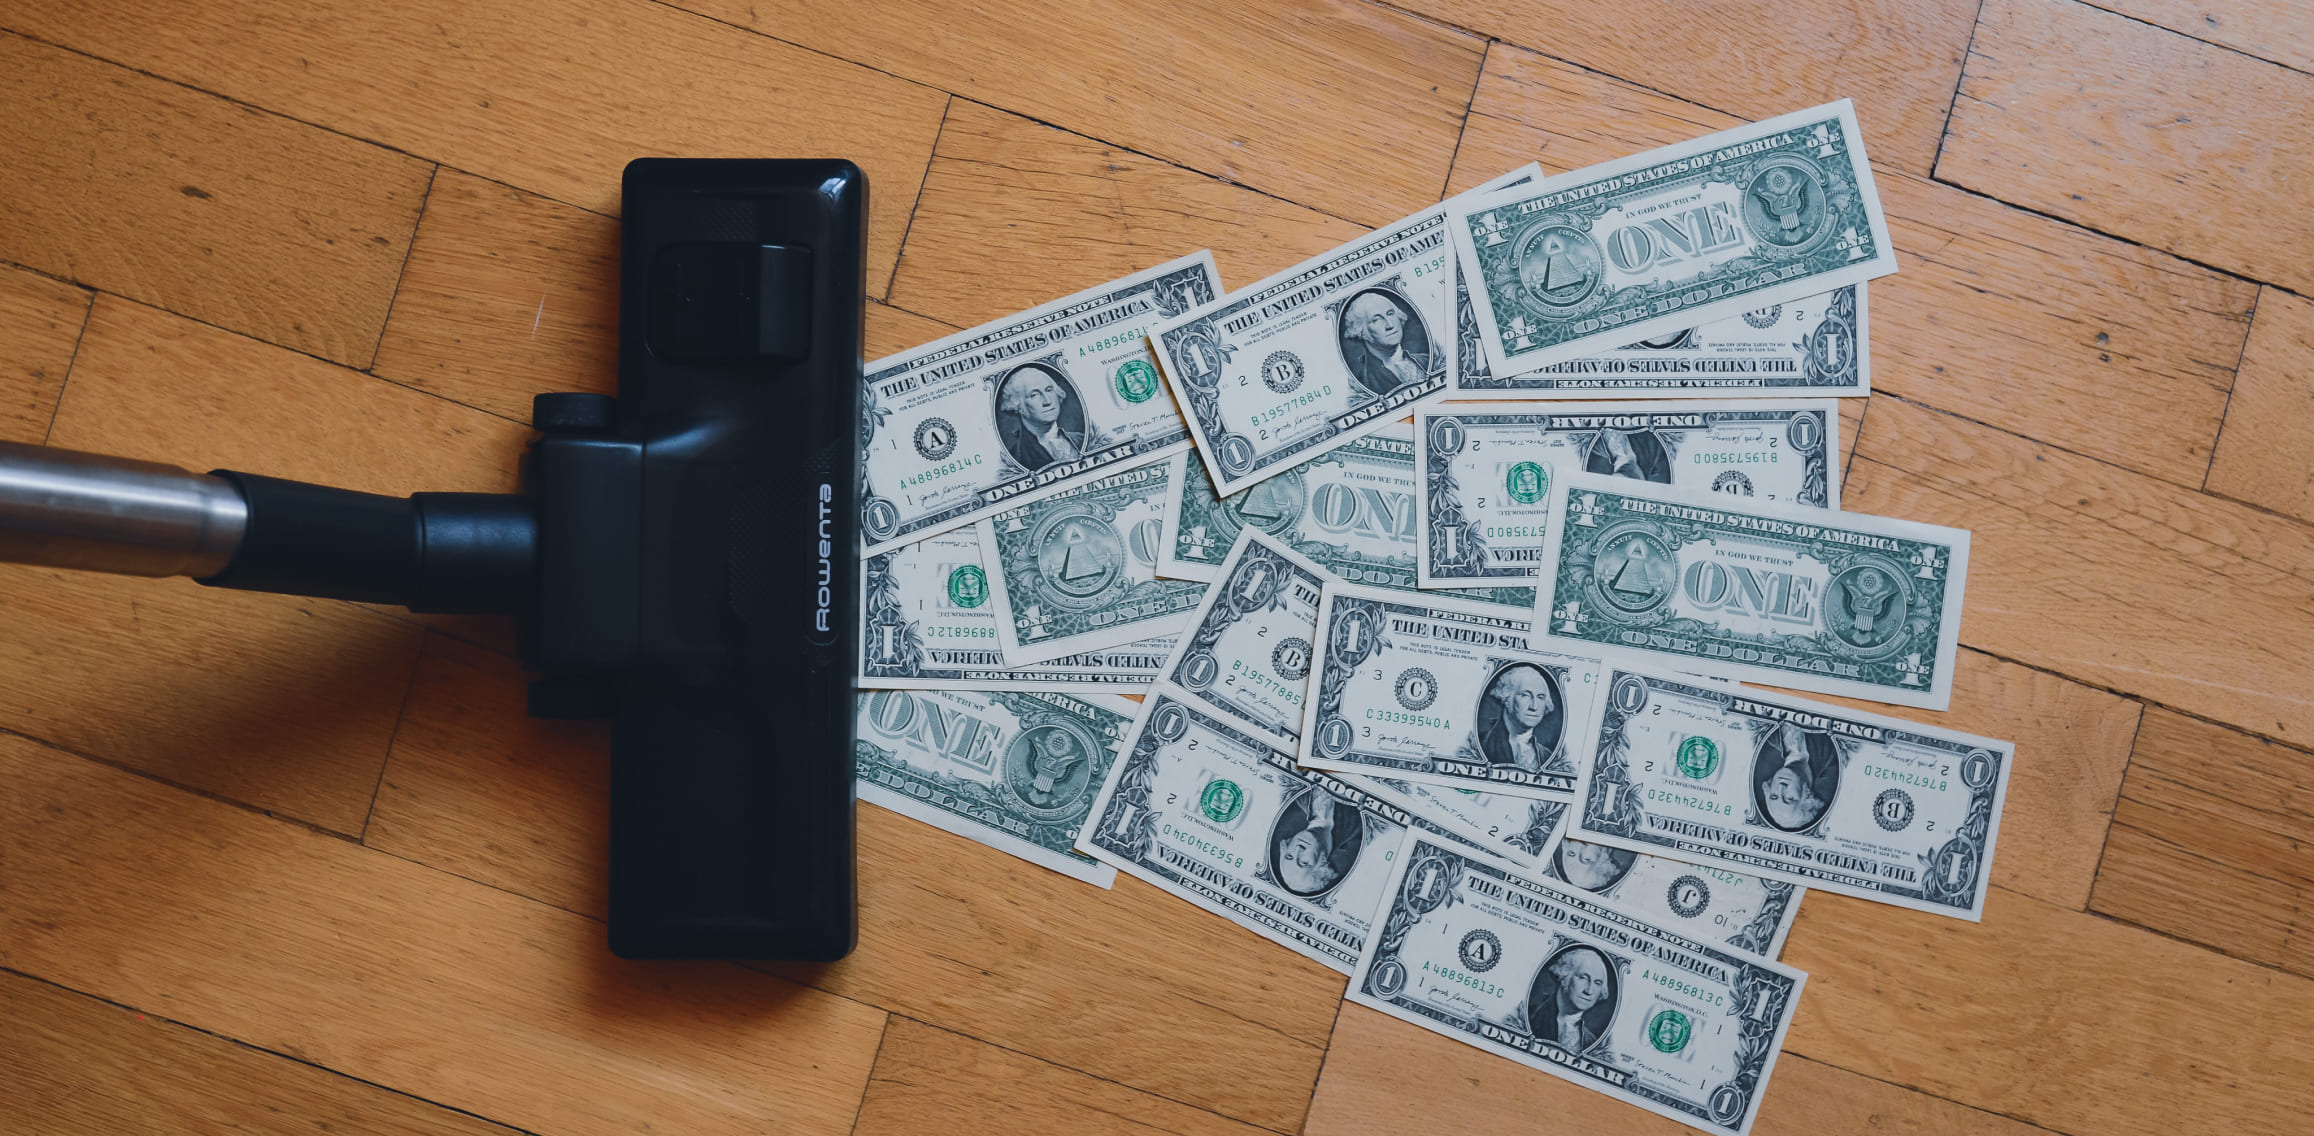 A vacuum runs over a pile of dollar bills on a hardwood floor.